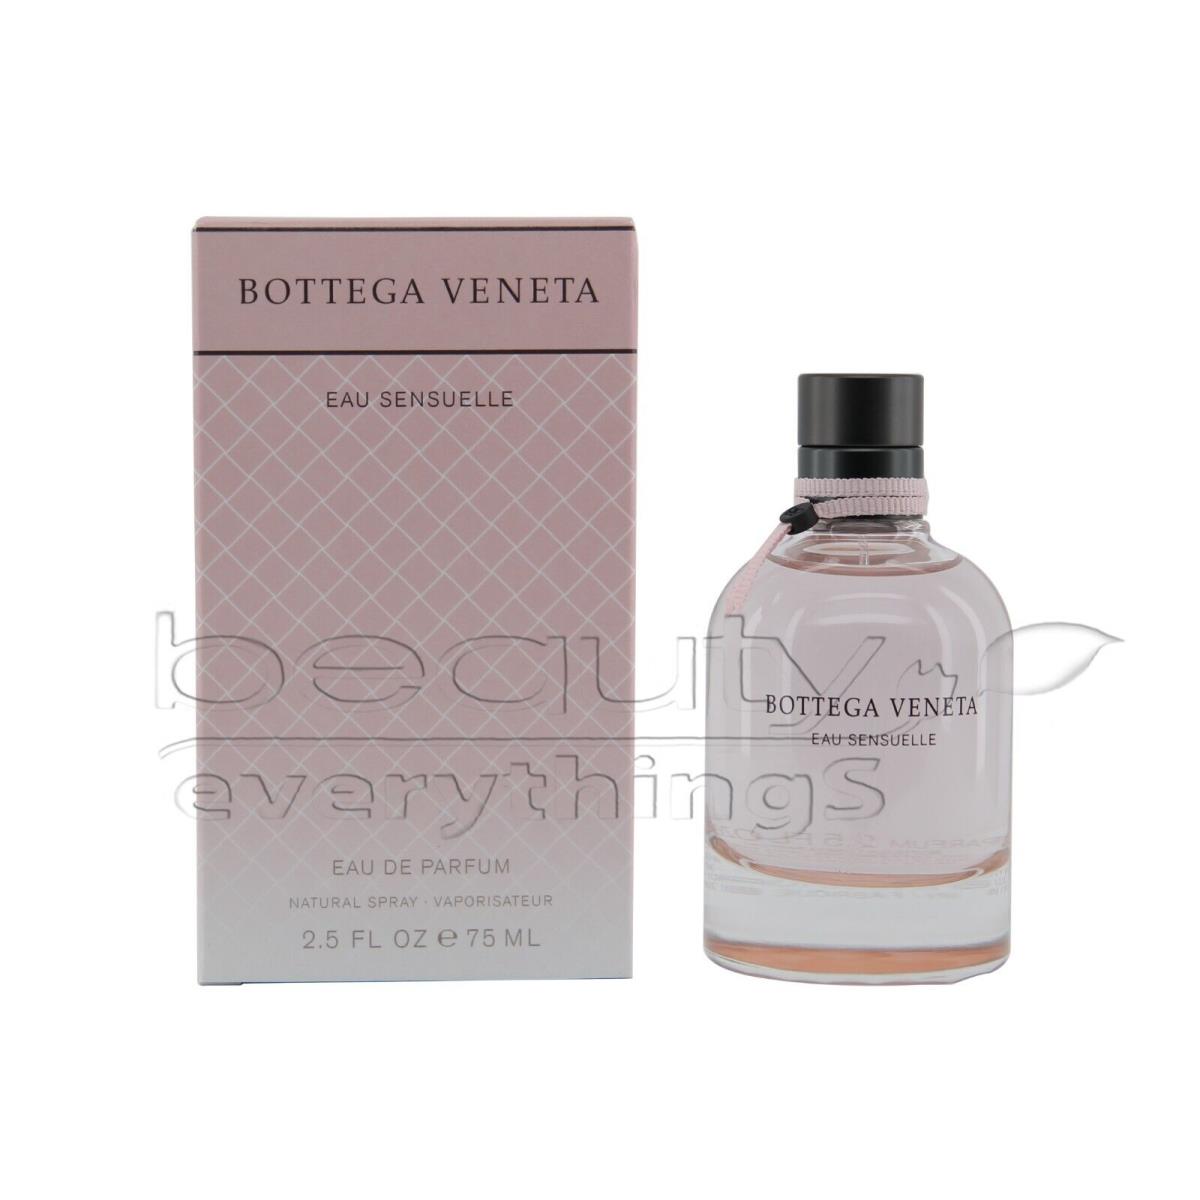 Bottega Veneta Eau Sensuelle 2.5oz / 75ml Edp Spray Women`s Perfume